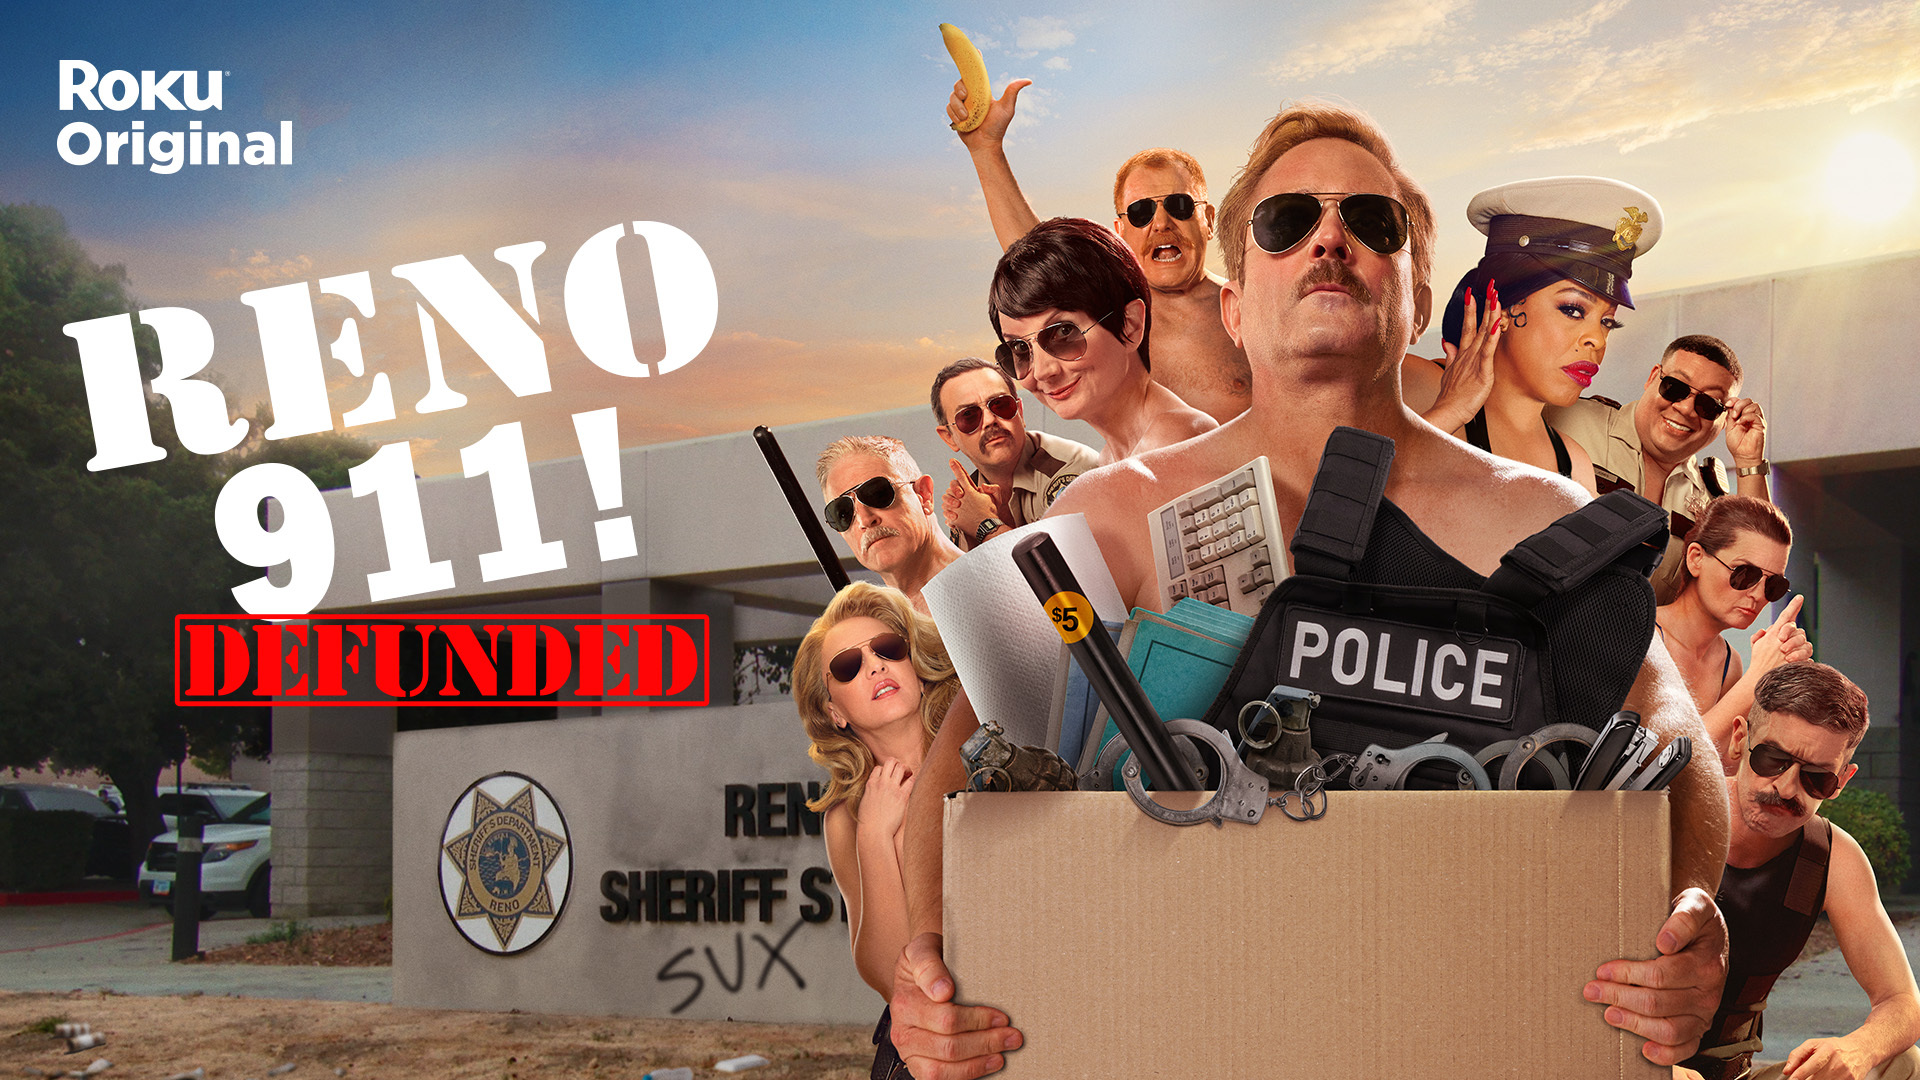 RENO 911! - TV Series